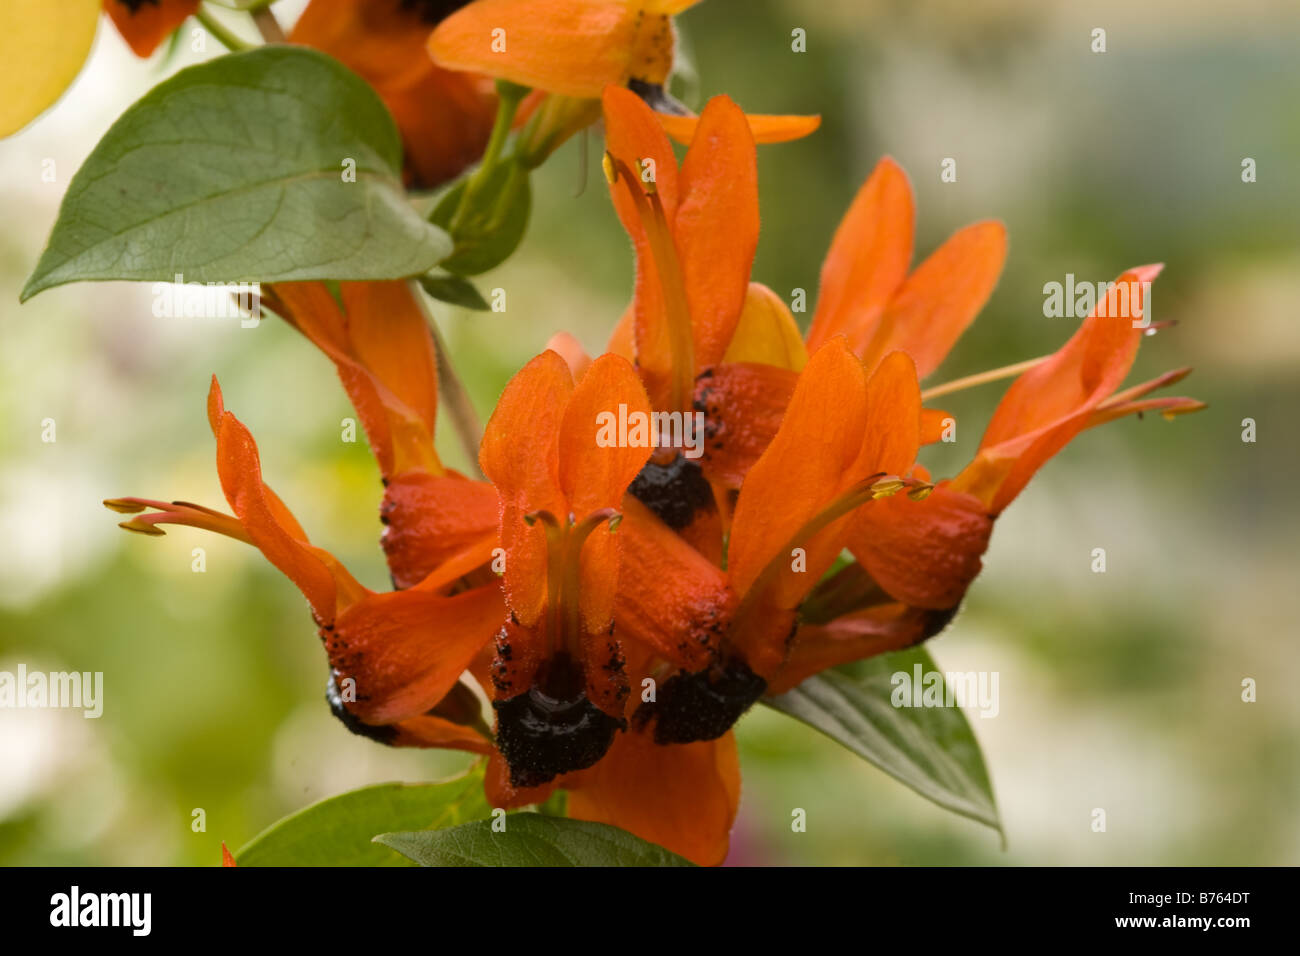 Hummingbird Plant, Rabbit Ears, Orange bird, Jammy Mouth, Jêmbekkie (Ruttya fruticosa, Acanthaceae) flowers Stock Photo